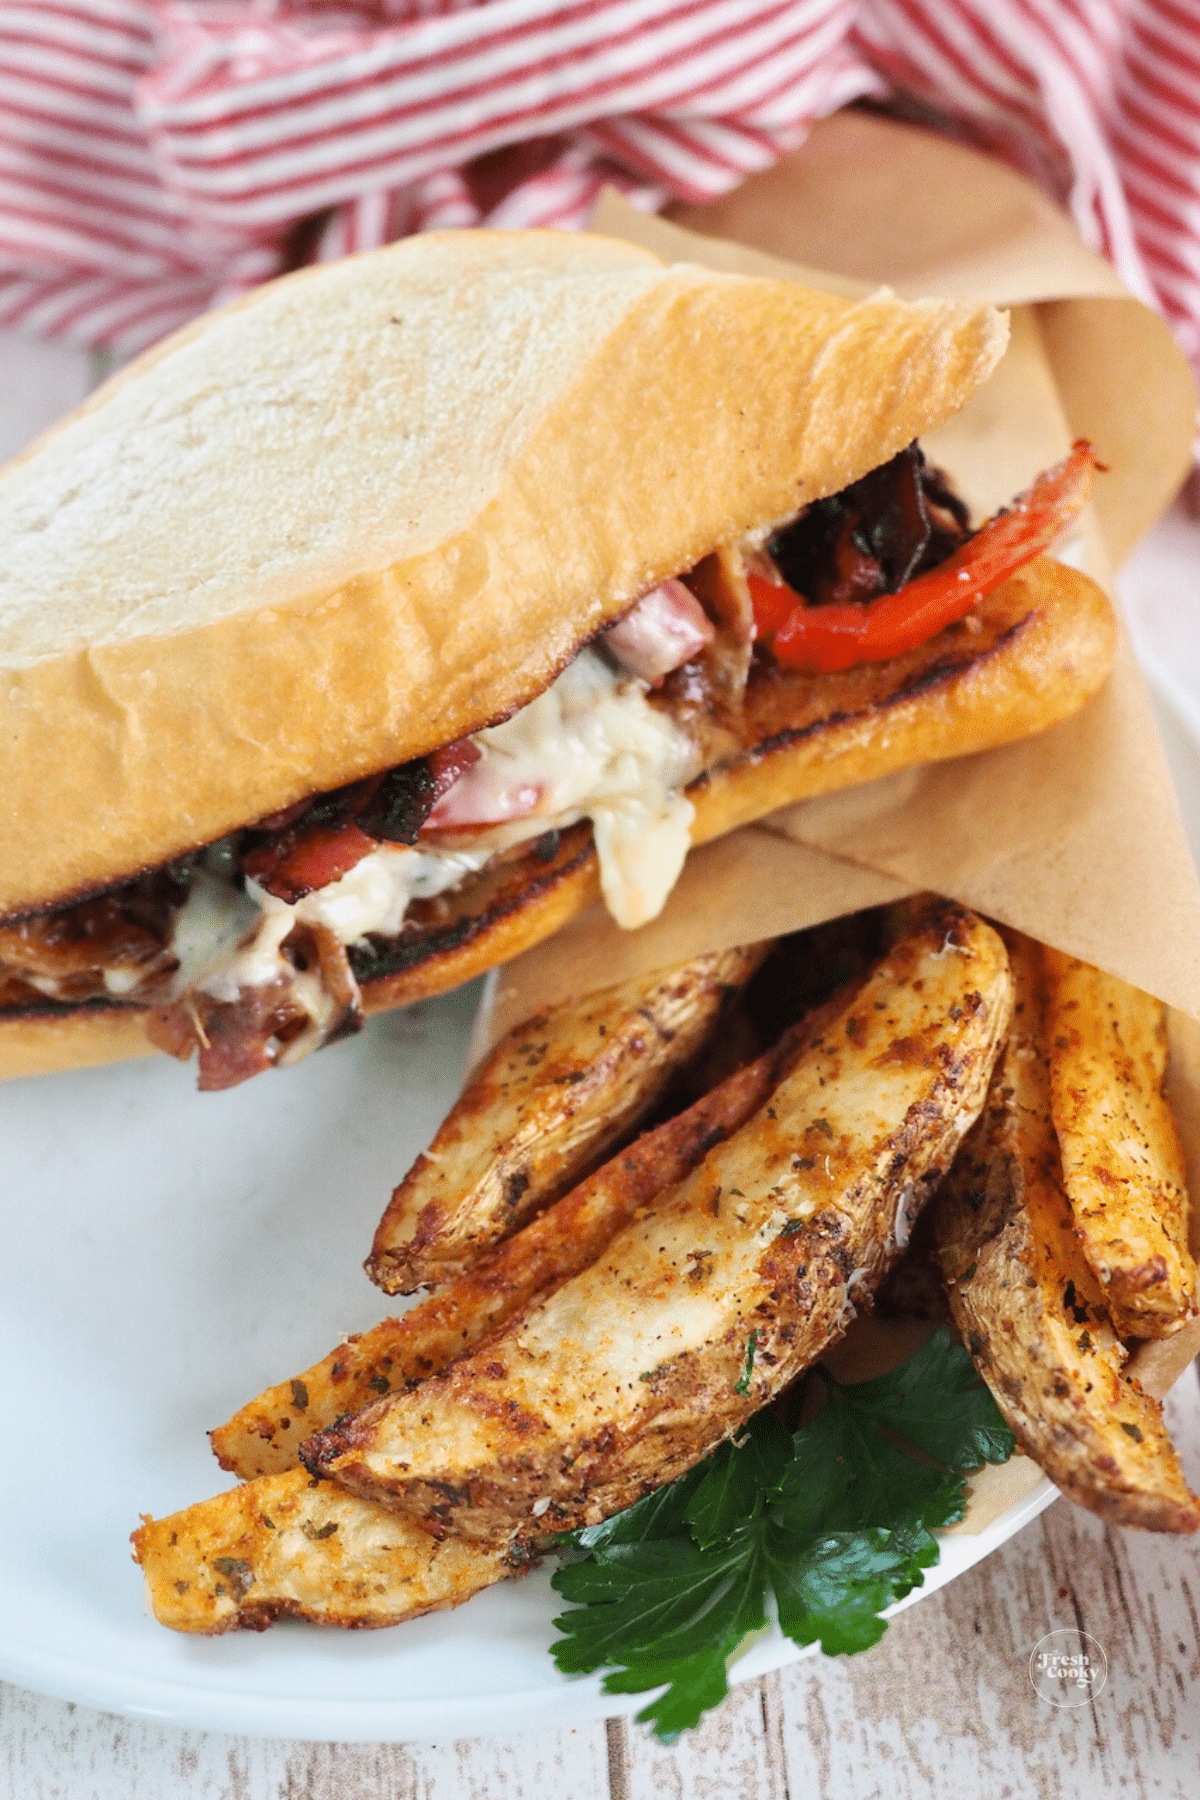 Steak sandwich on plate with steak fries, serving suggestion.